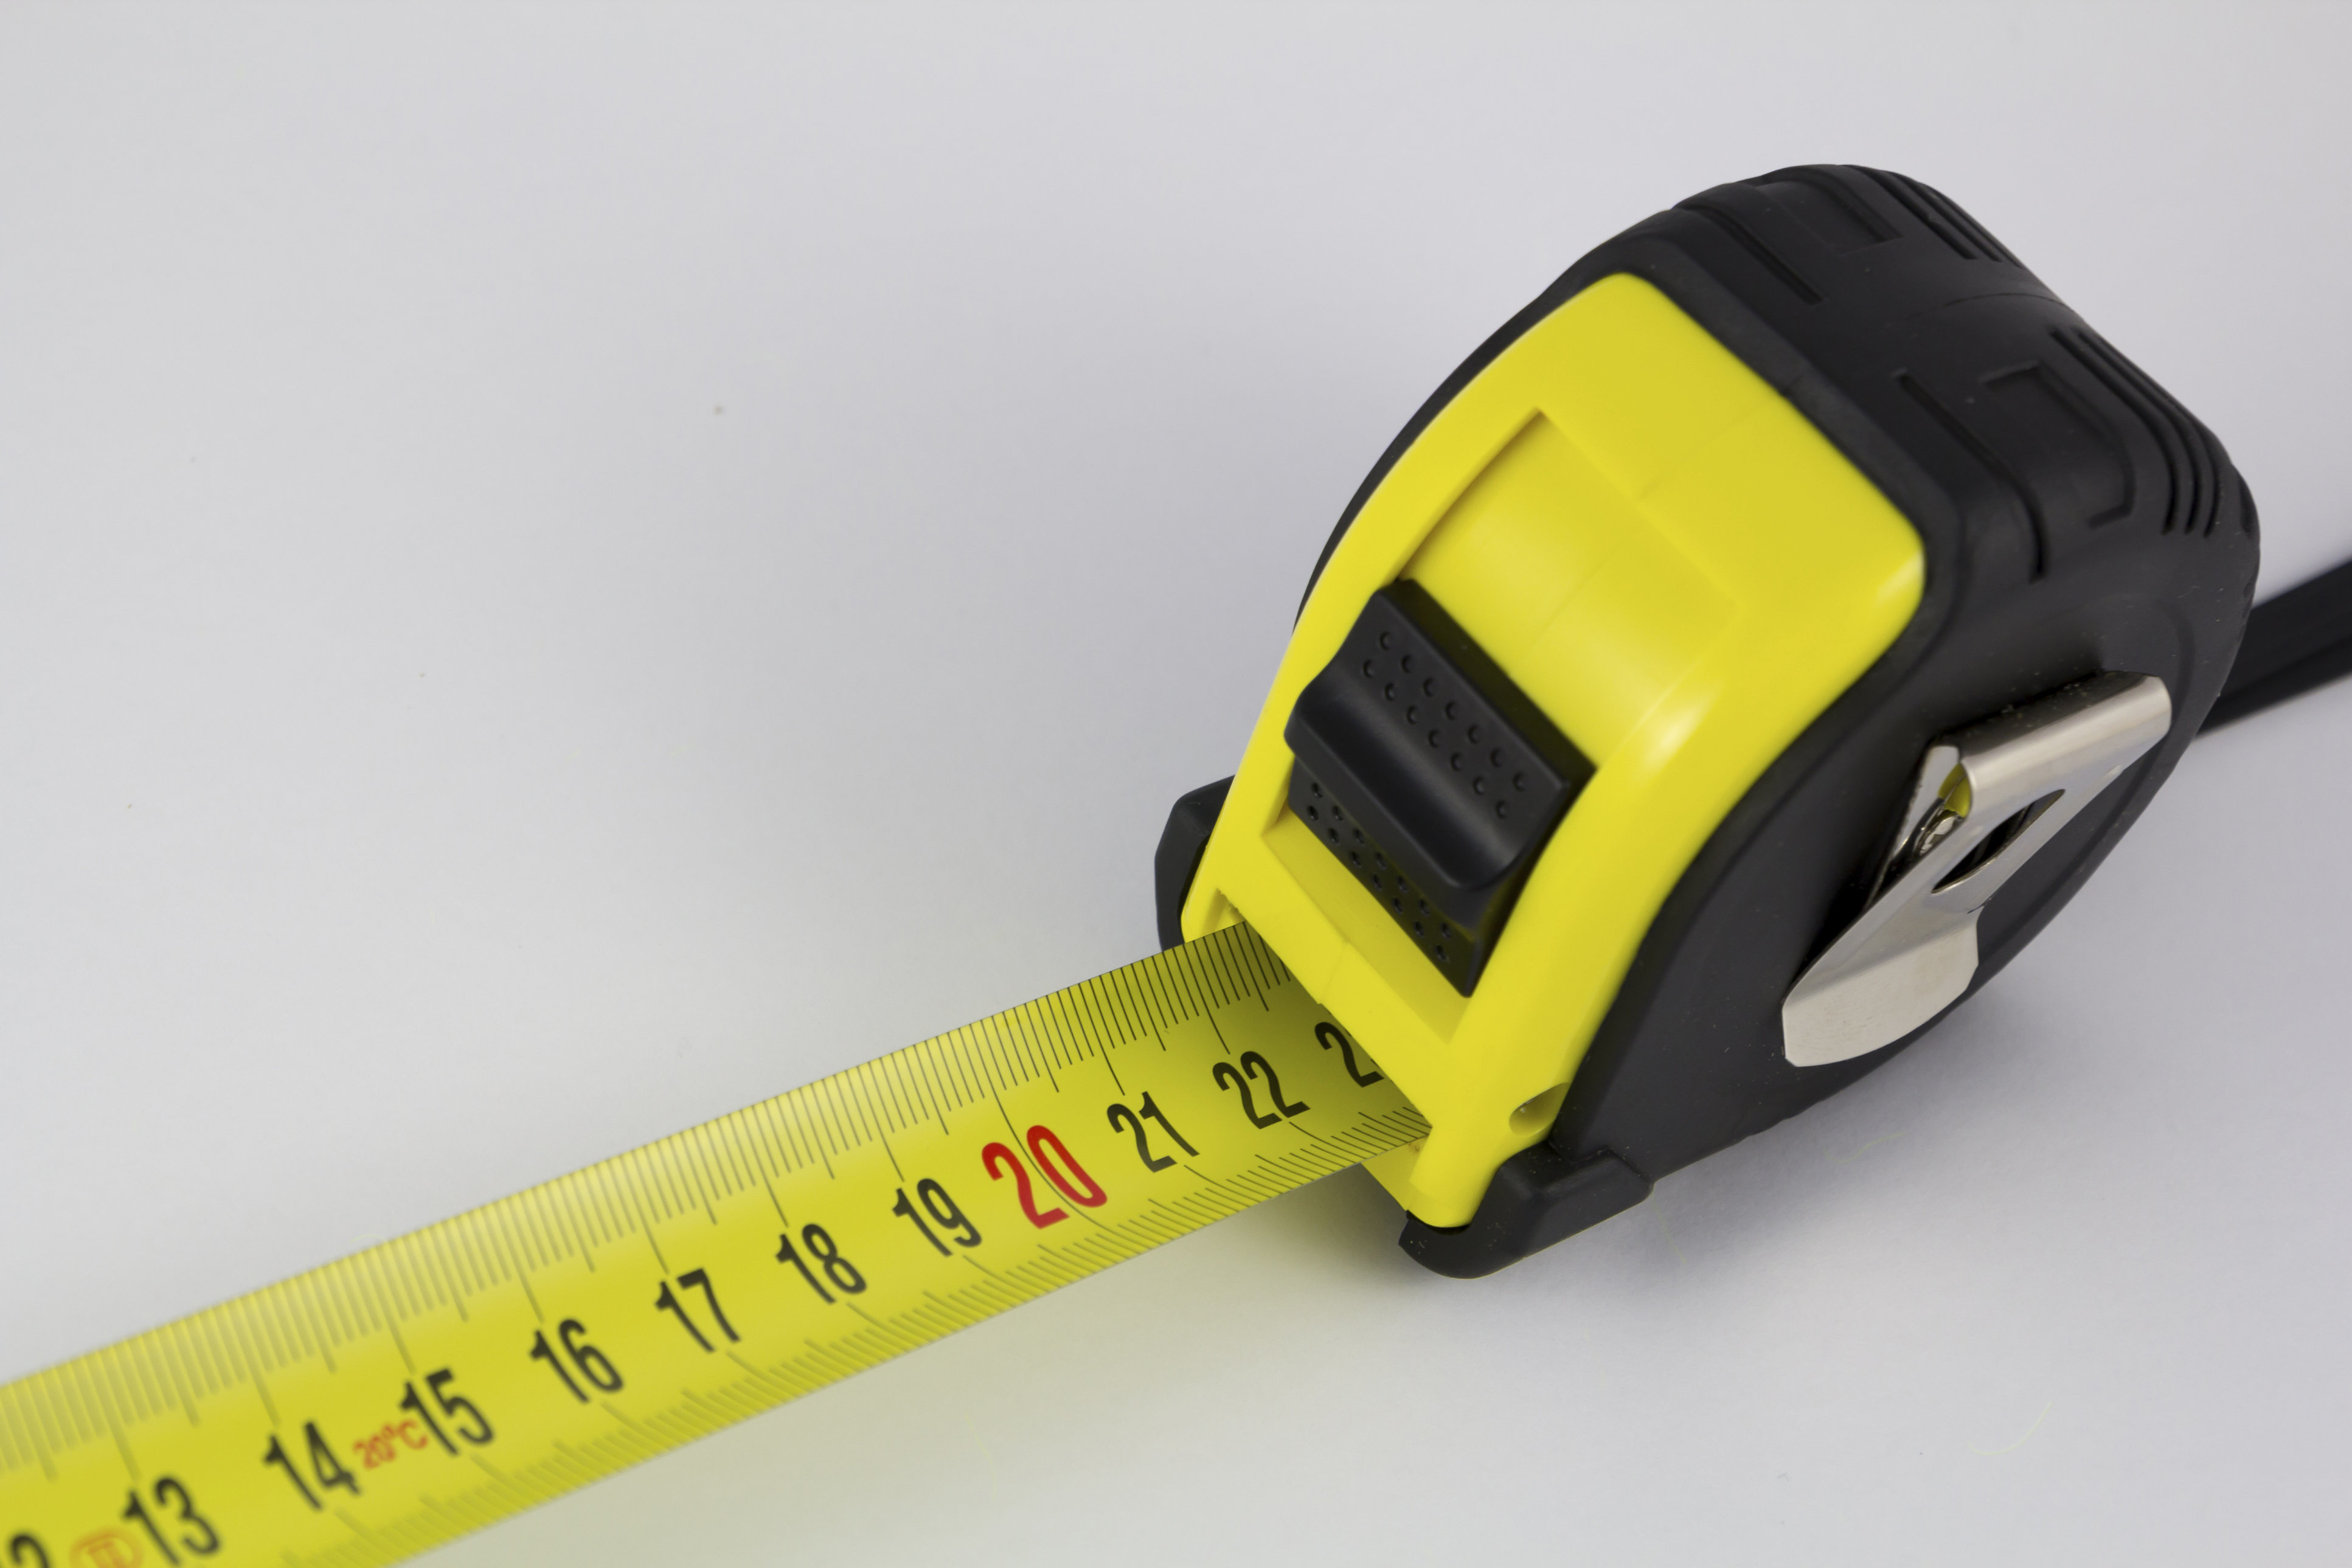 standard error measurement tape measure